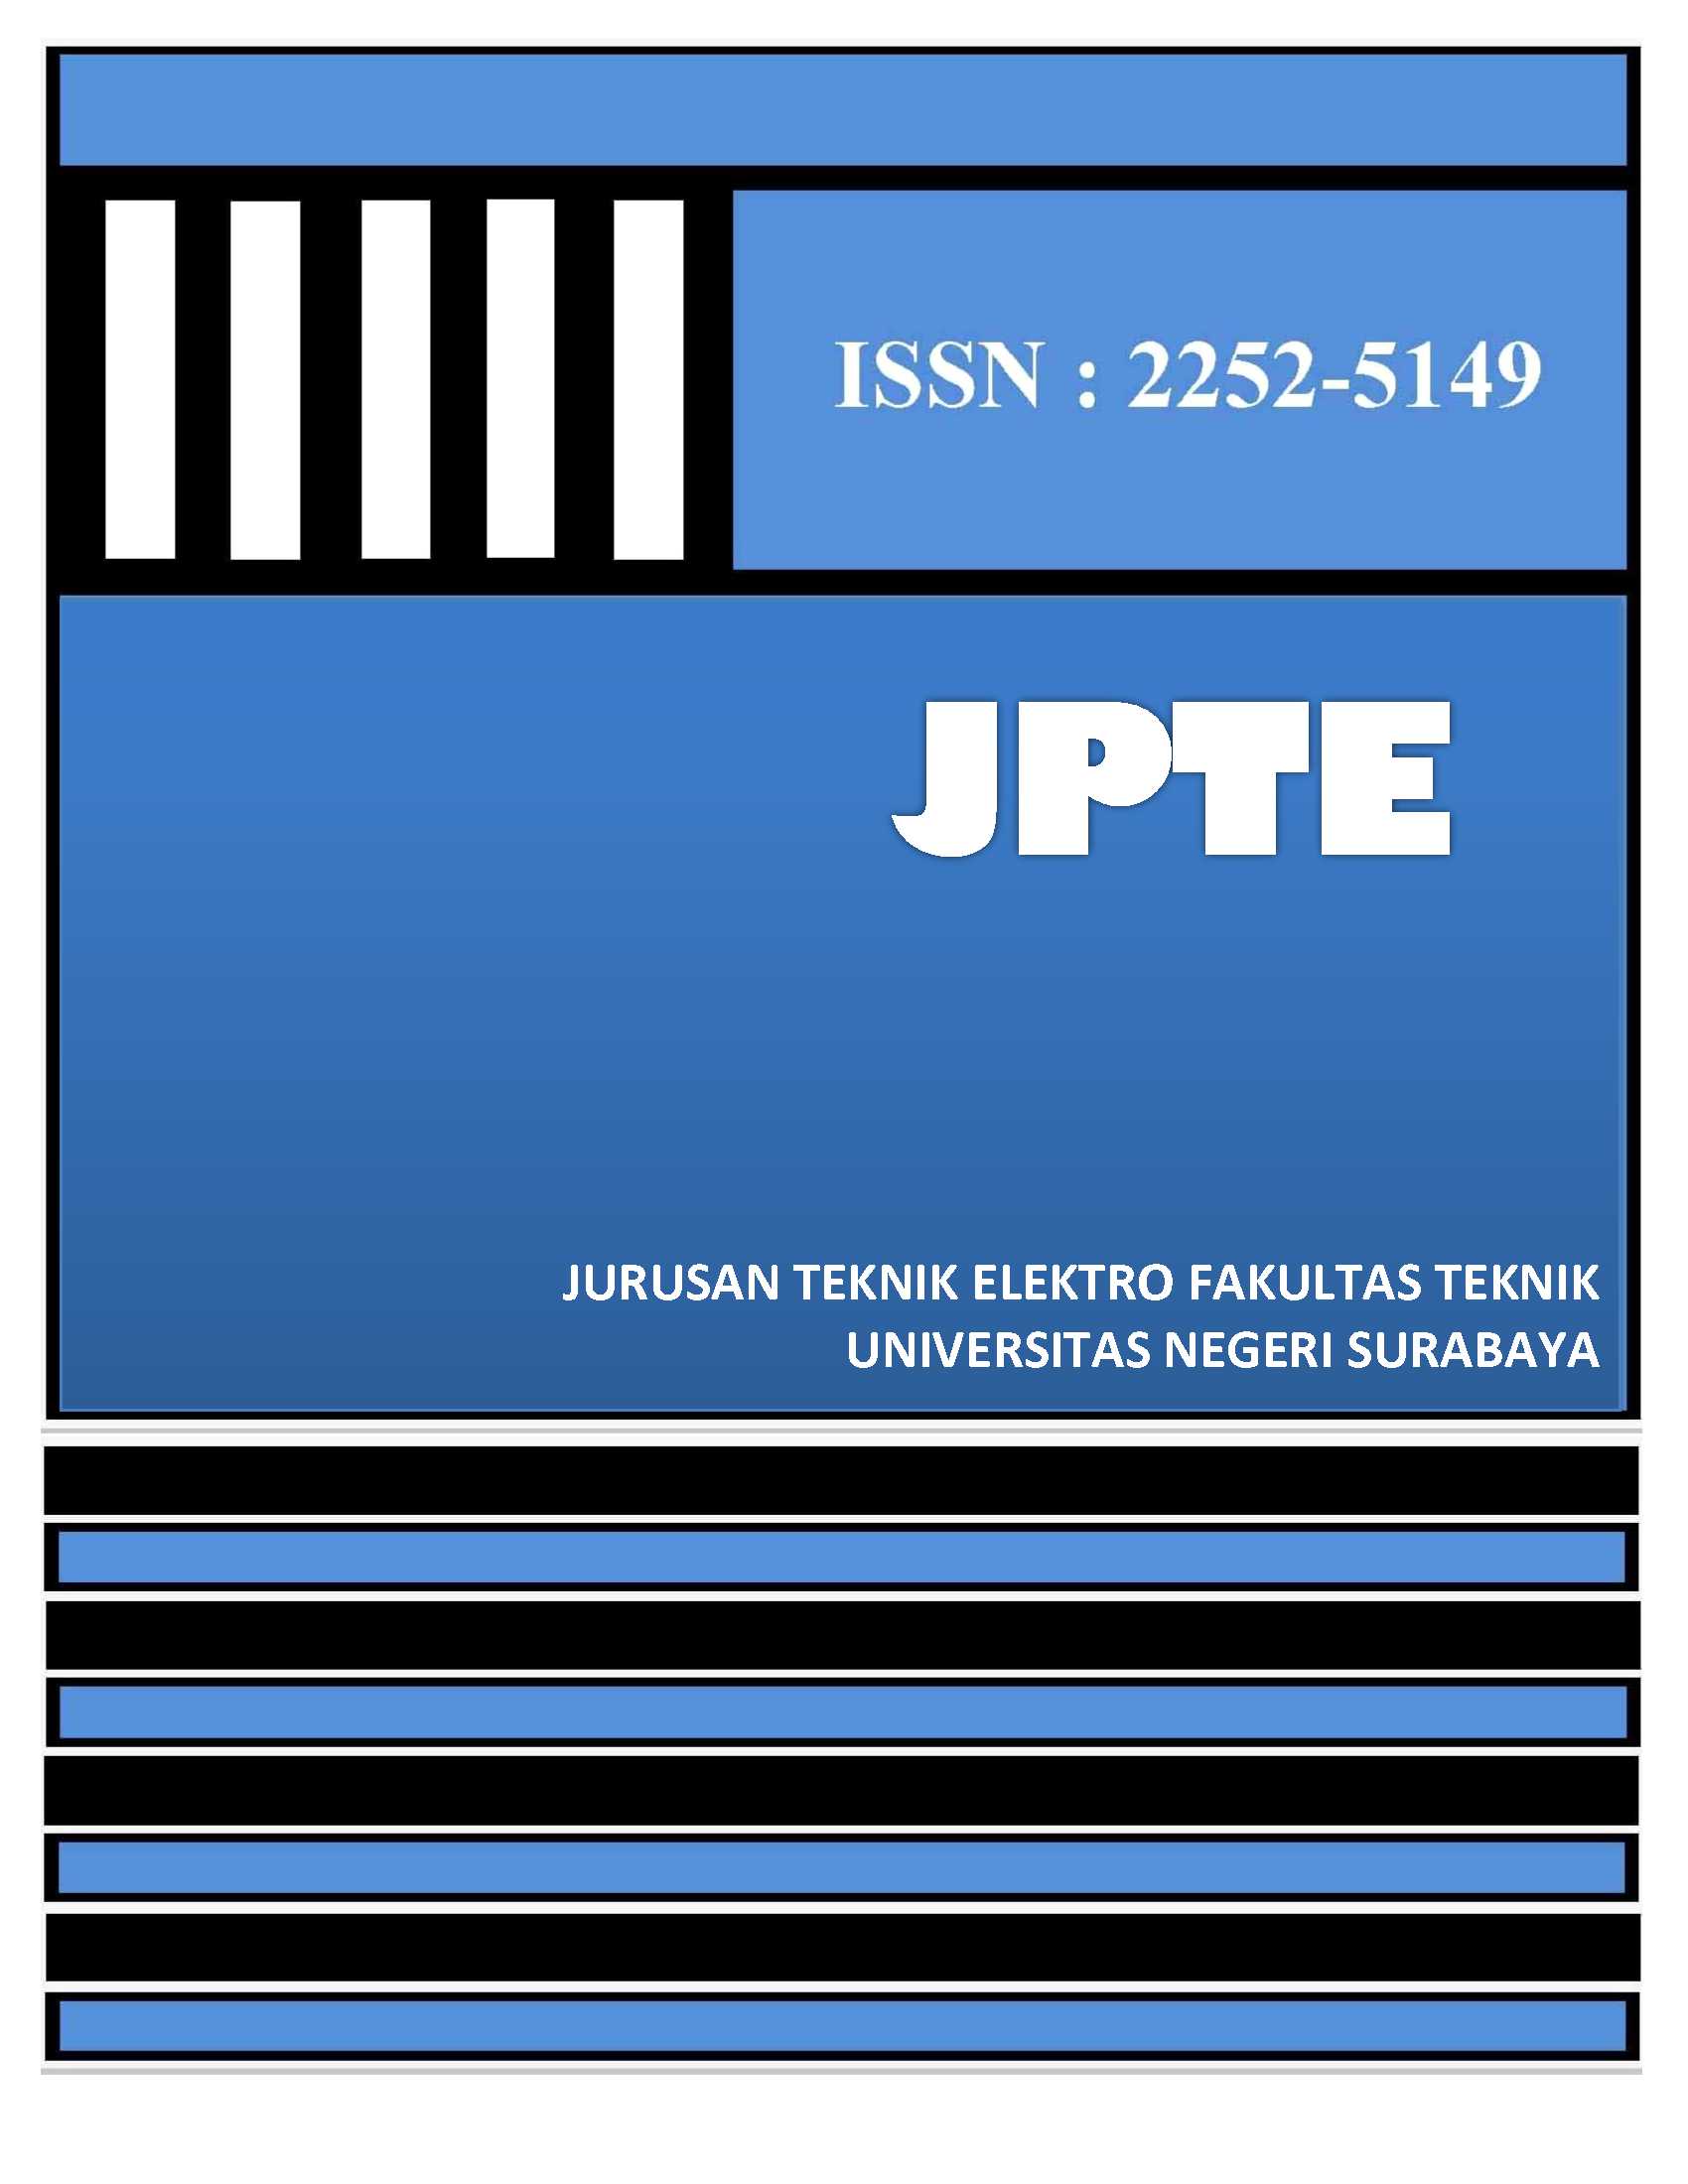 JPTE (Jurnal Pendidikan Teknik Elektro) mempublikasikan hasil penelitian ilmiah dosen, mahasiswa dan peneliti di Bidang Ilmu Pendidikan Teknik Elektro berupa penelitian dasar, perencanaan dan perancangan. JPTE terbit secara berkala empat bulanan (Januari,